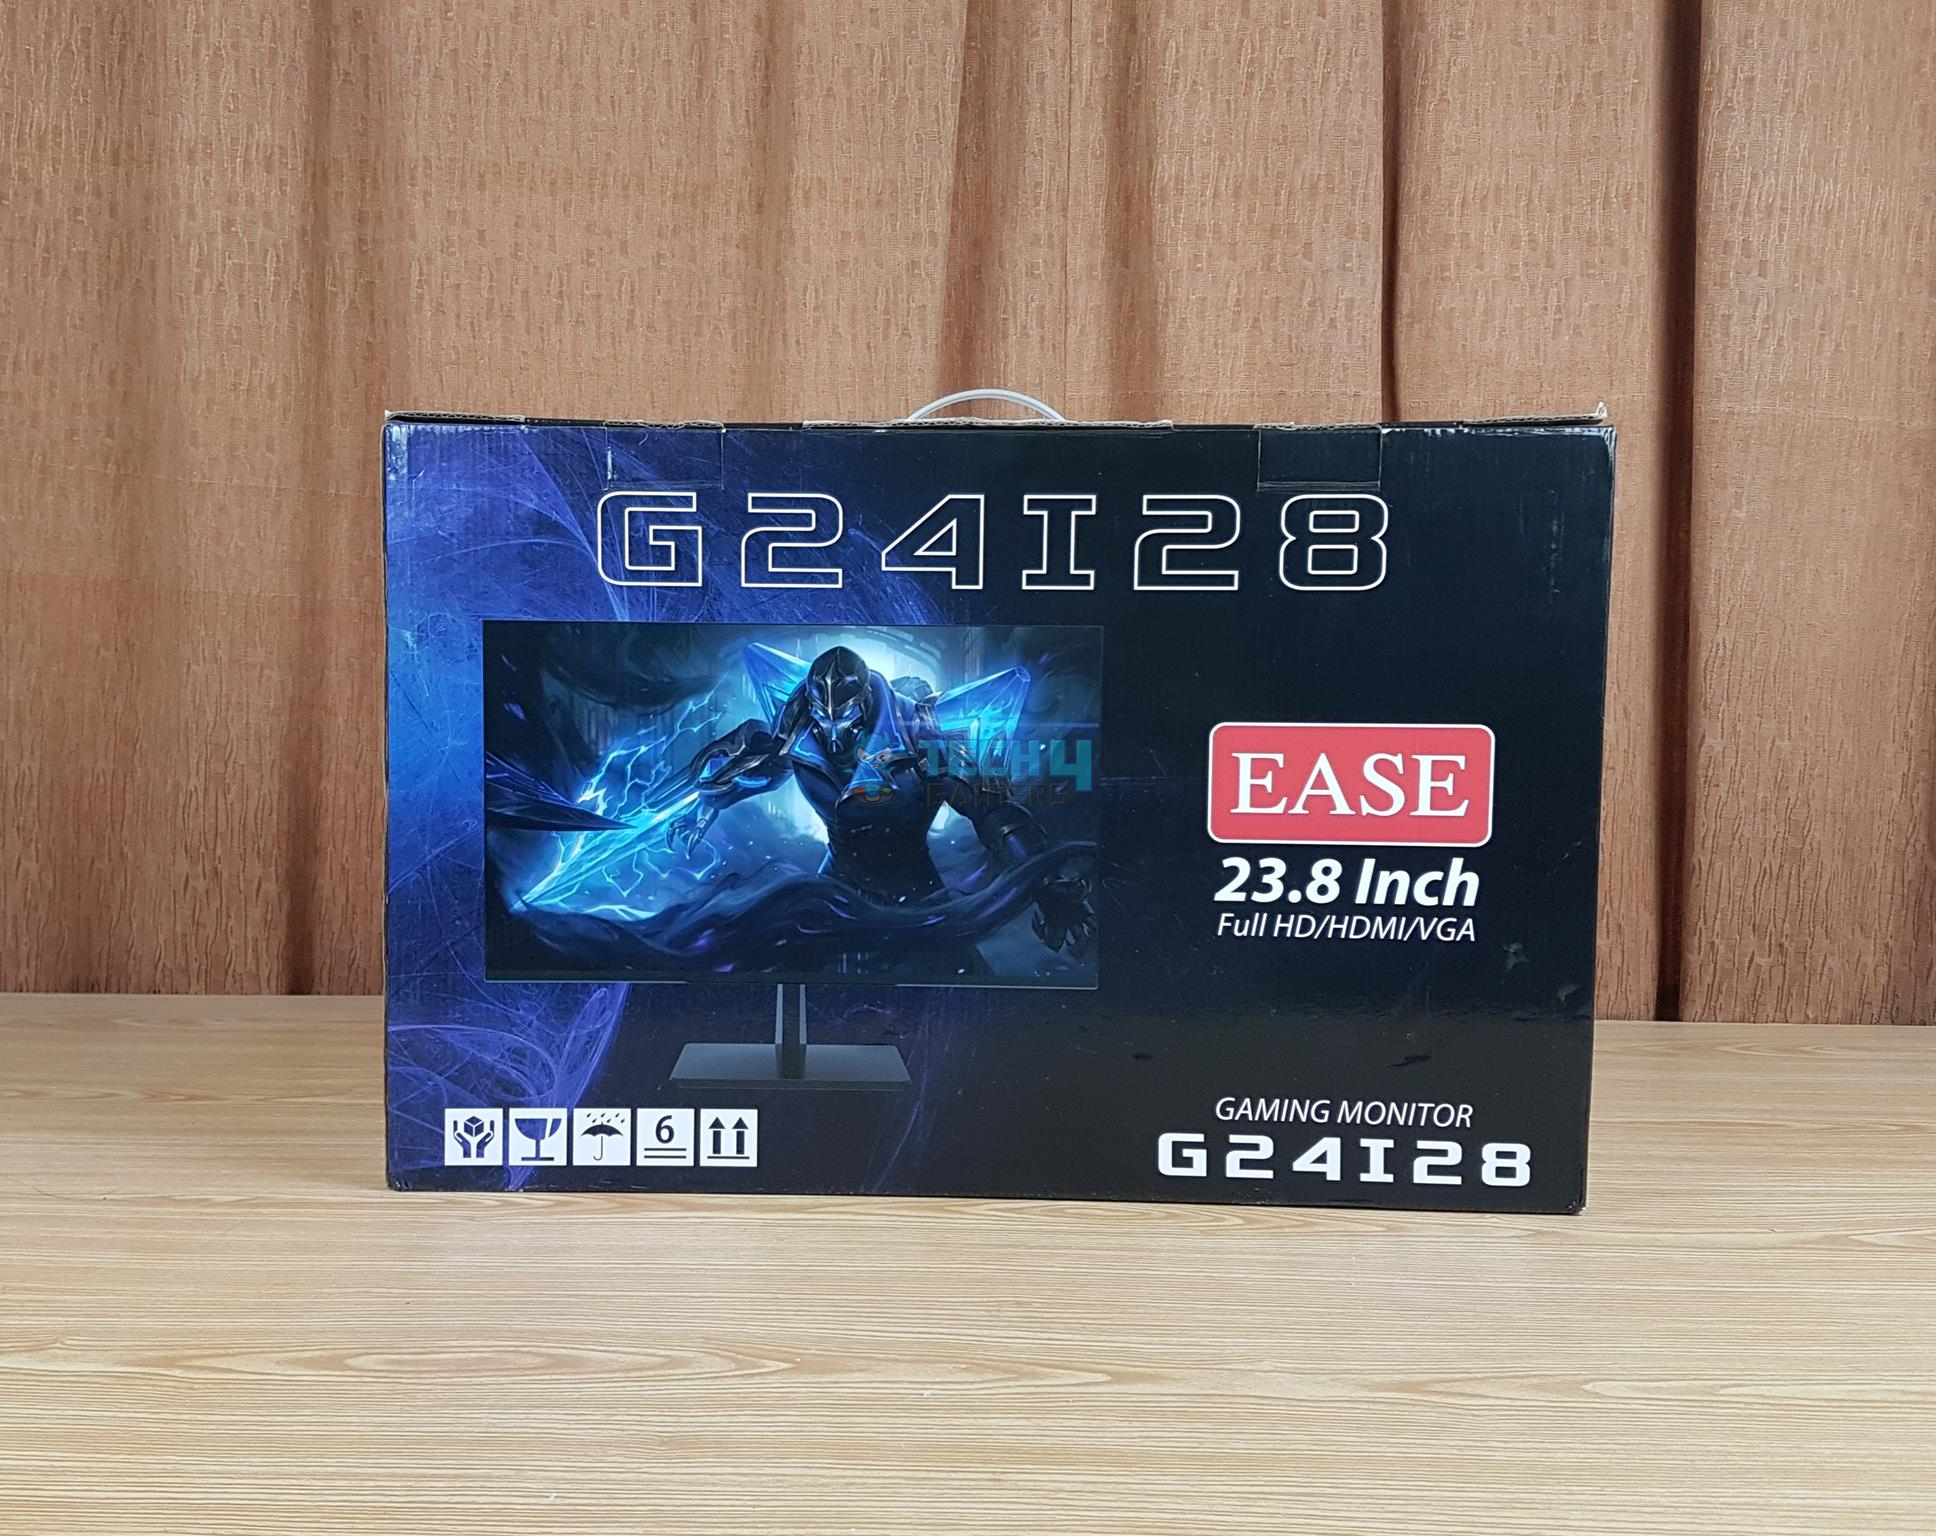 EASE G24I28 Gaming Monitor 